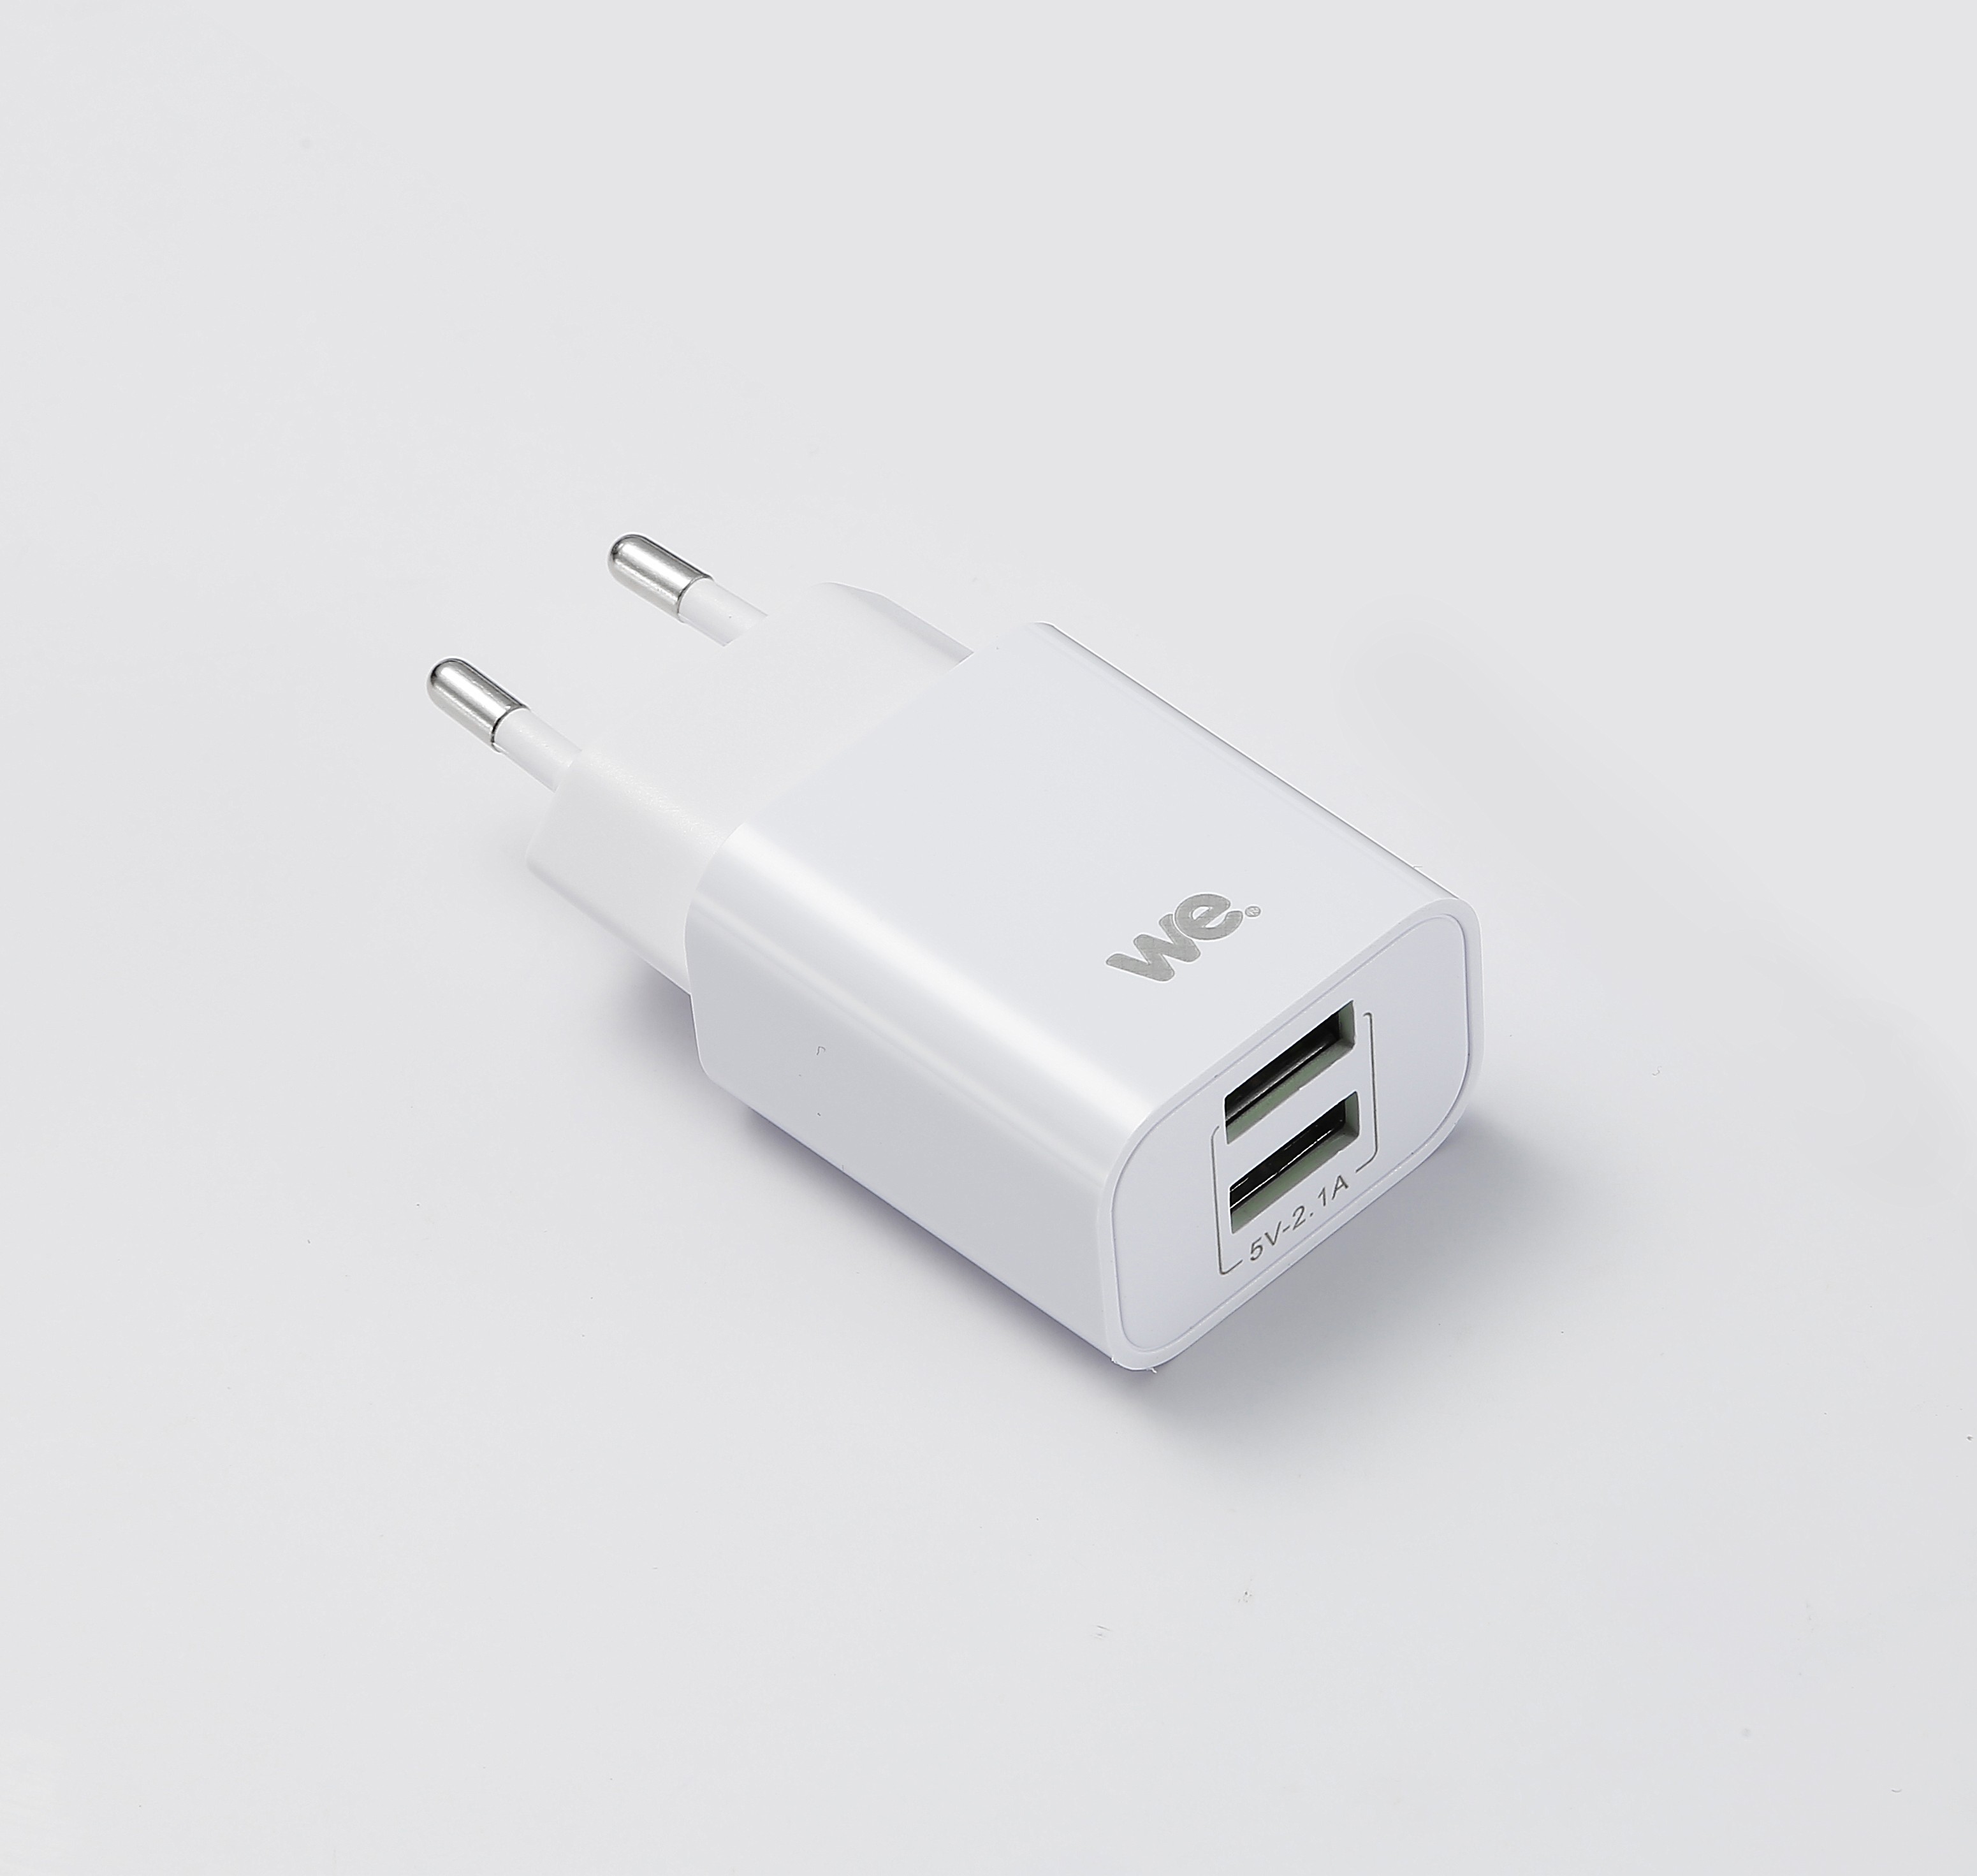 Chargeur mural USB double - 5 V - 1 A et 2.1 A - Blanc